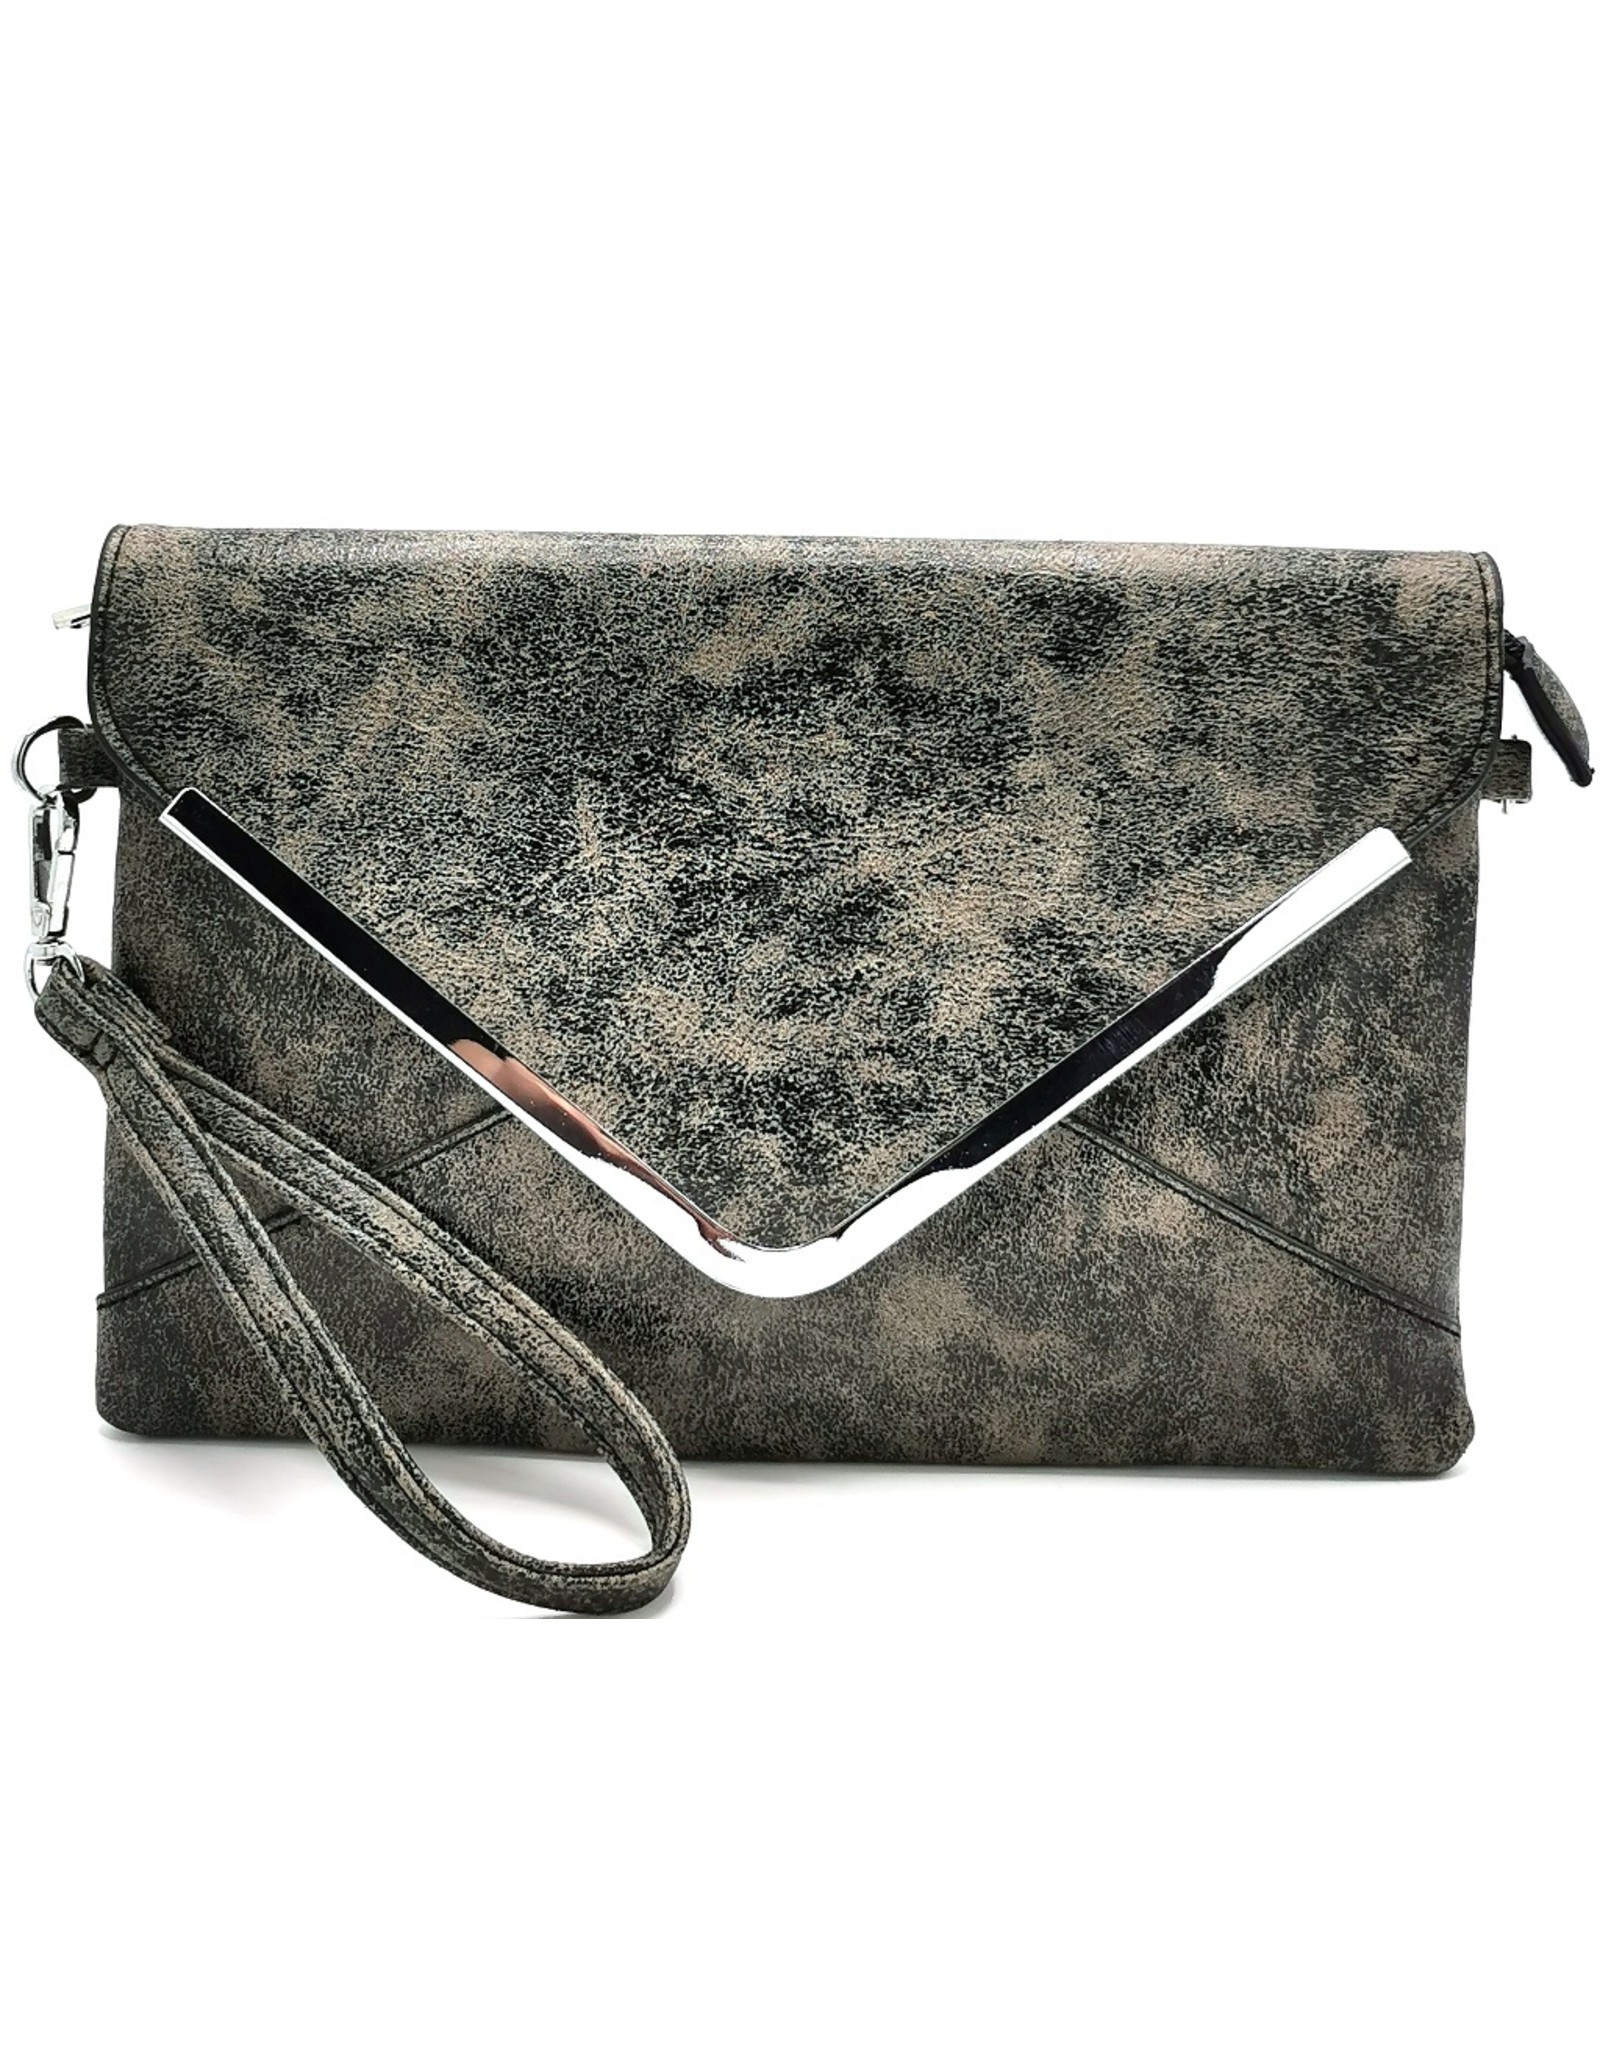 Xuna Clutches, Evening Purses, wallets - Xuna Clutch Evening purse vintage black